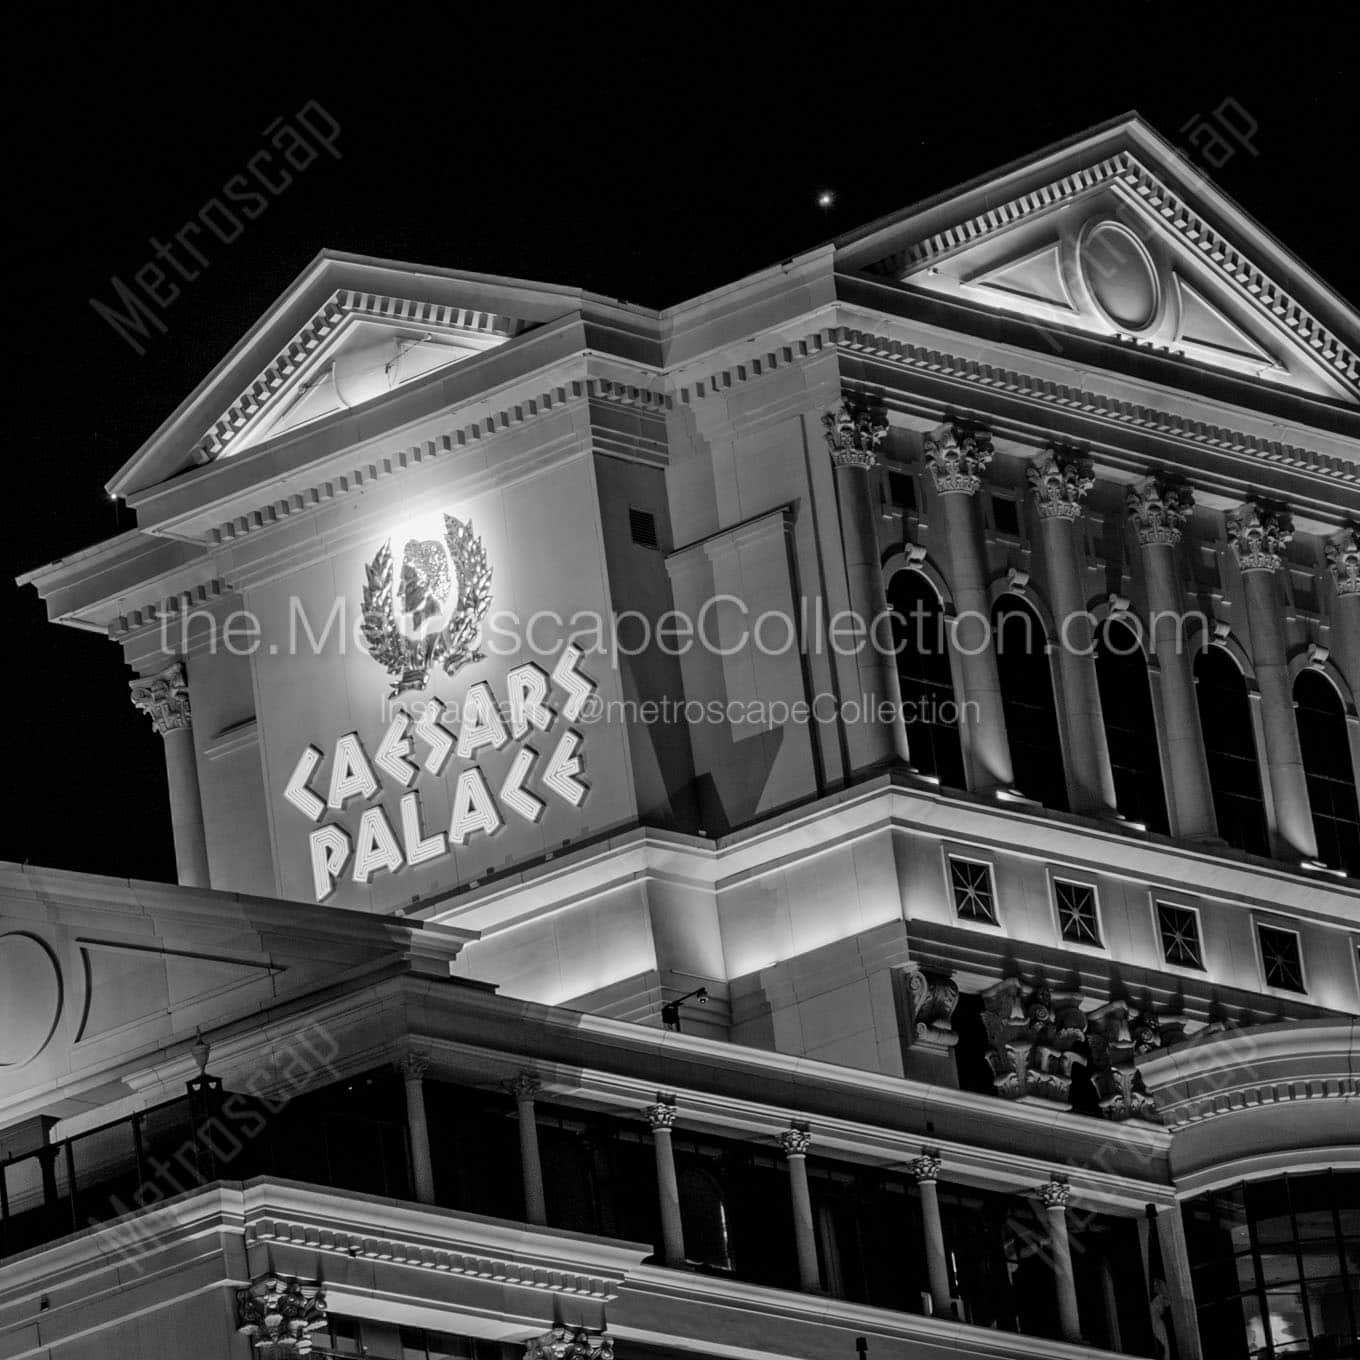 caesars palace at night Black & White Wall Art